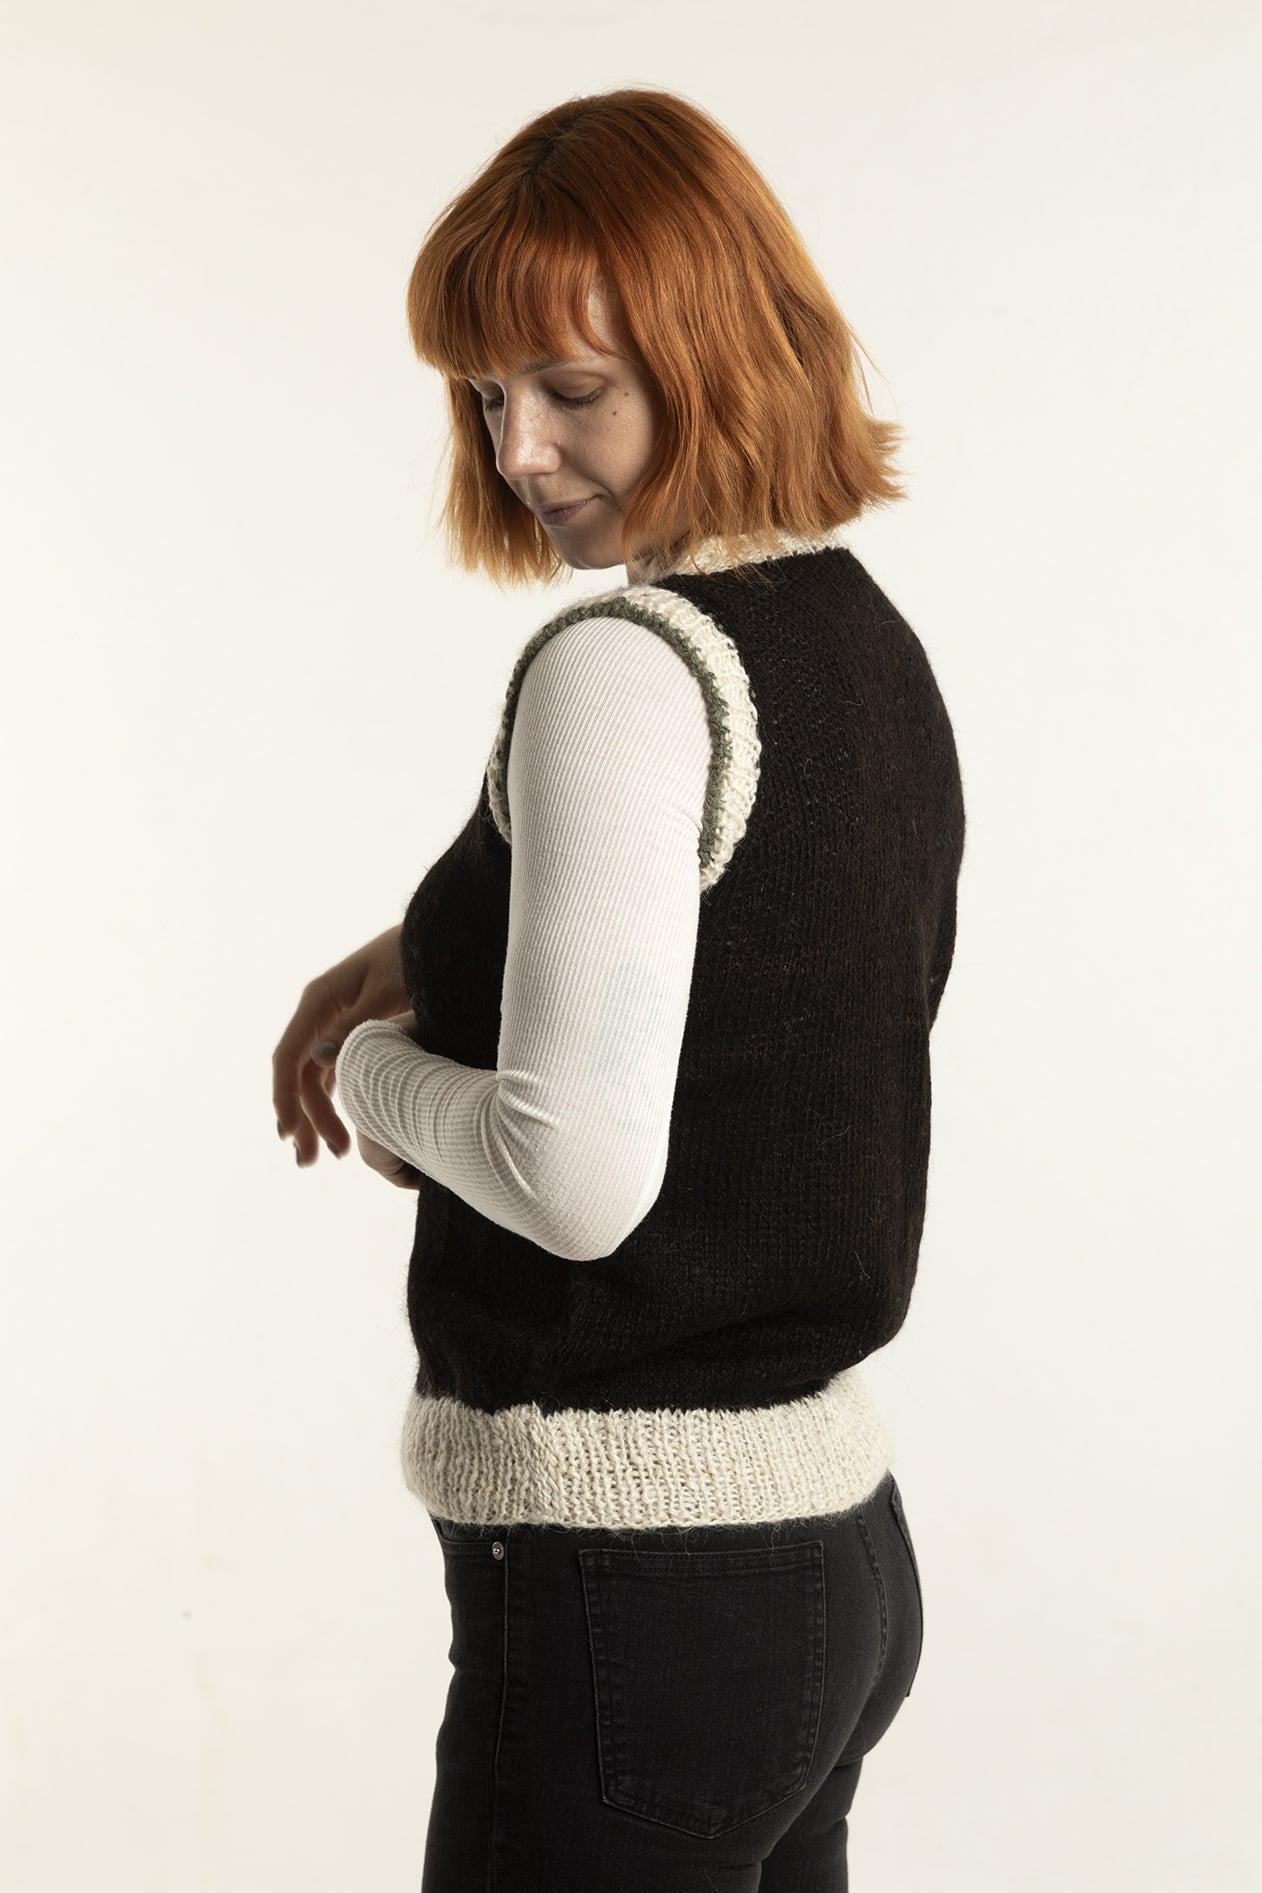 Sweater vest made of llama wool